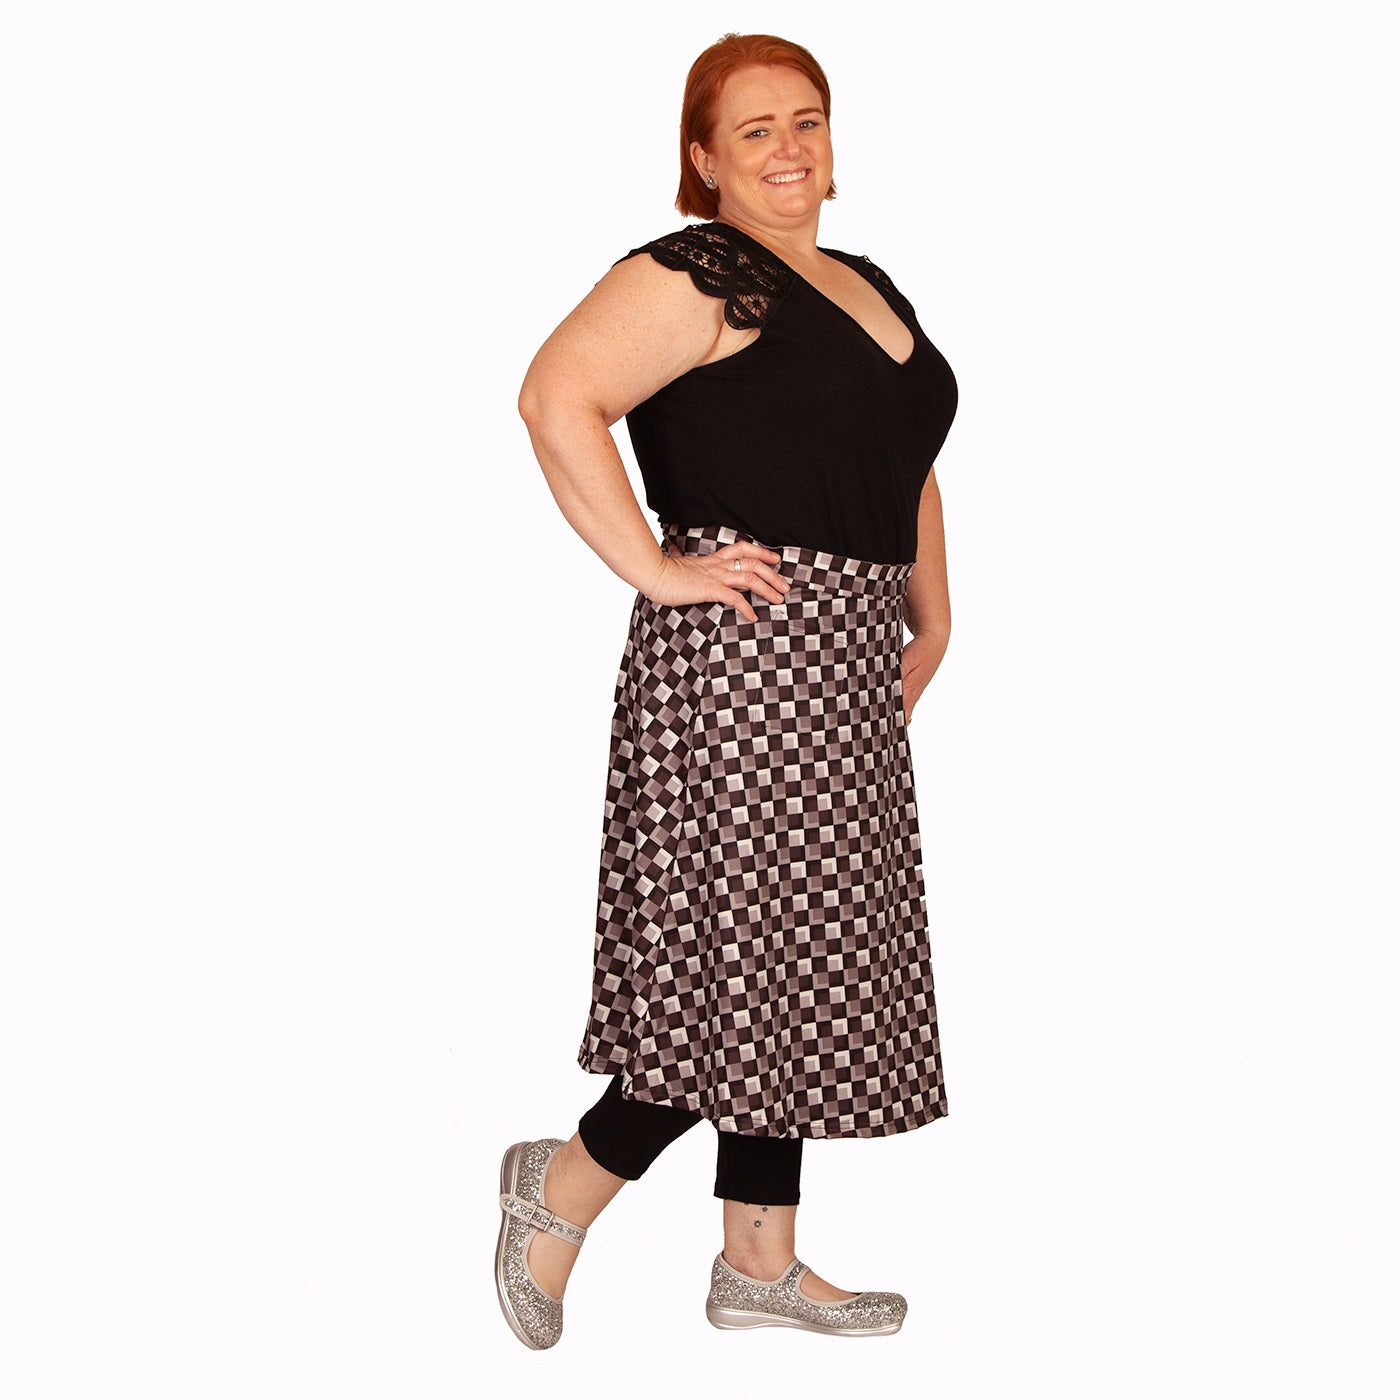 Too Square Original Skirt by RainbowsAndFairies.com (Black White Grey Check - Monochrome - Stripes - Skirt With Pockets - Aline Skirt - Vintage Inspired - Rock & Roll) - SKU: CL_OSKRT_TOOSQ_ORG - Pic 06